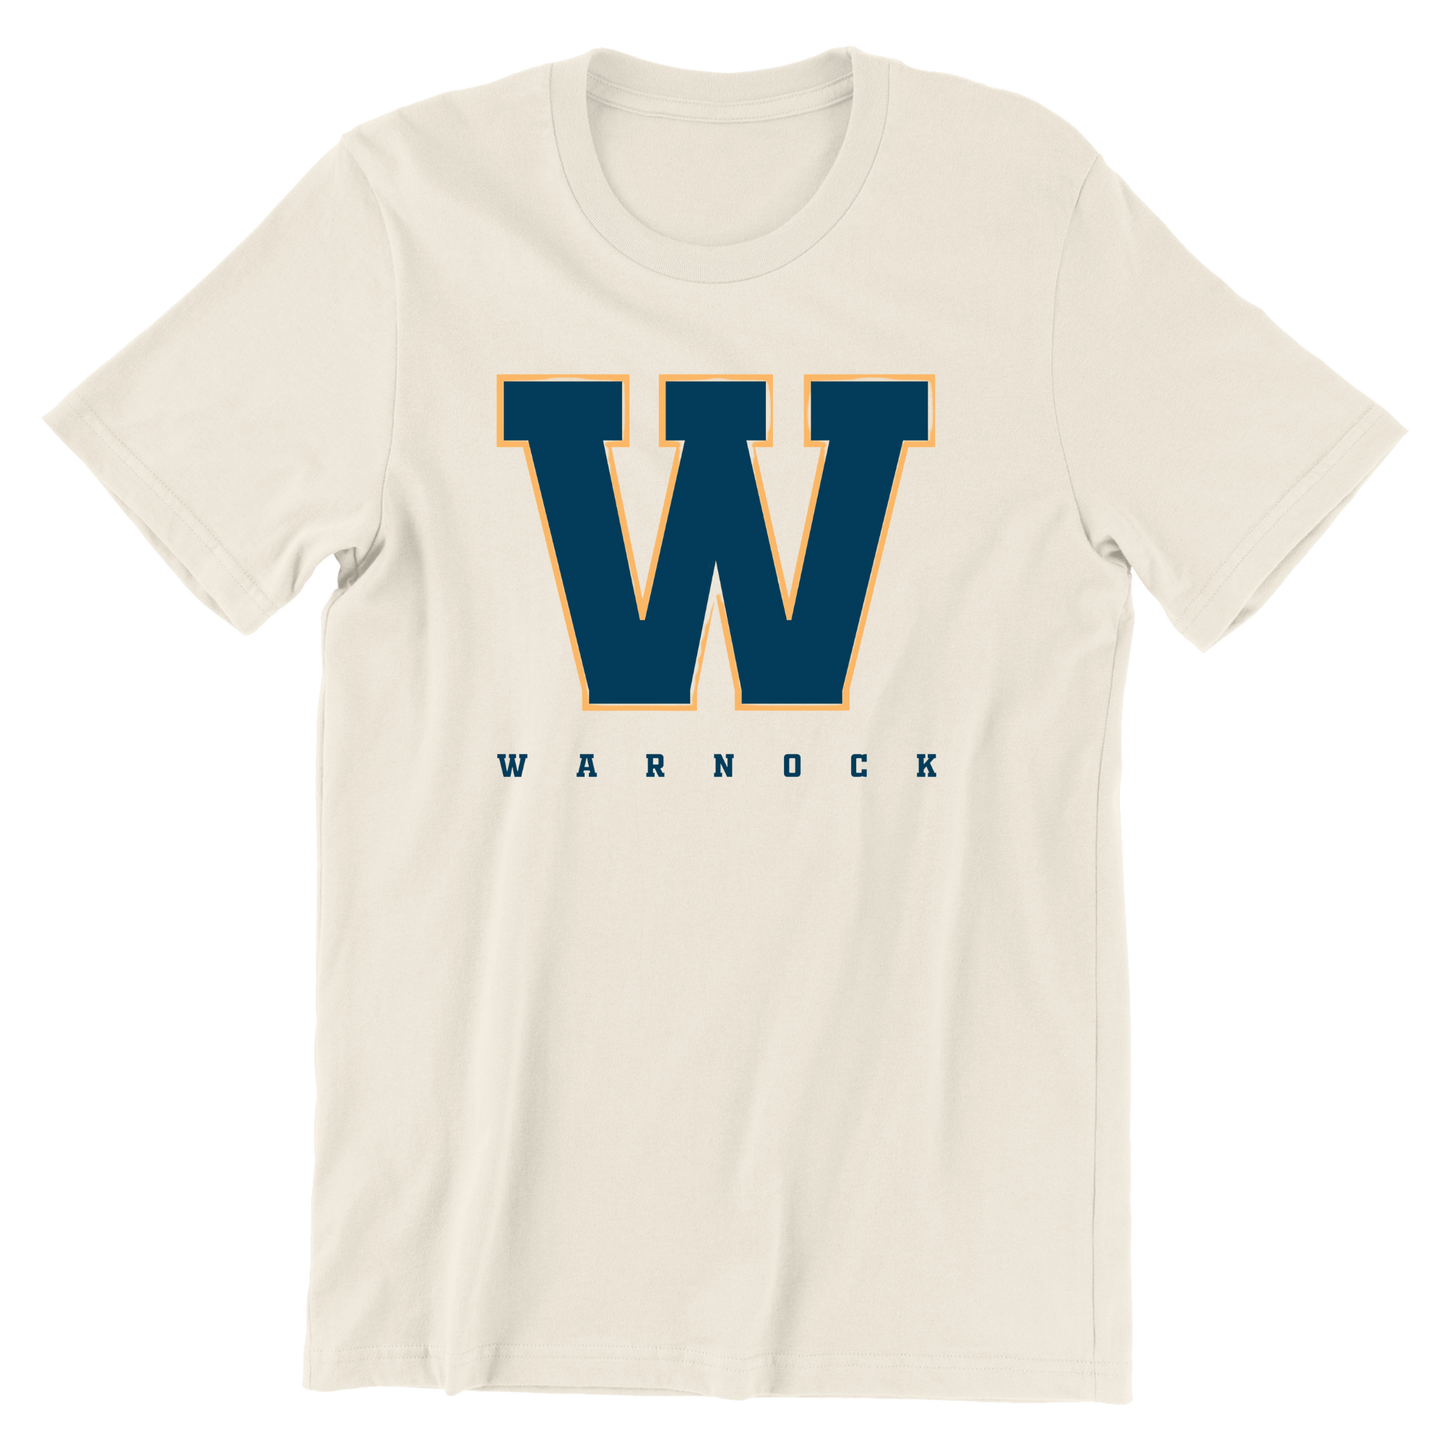 Warnock "W" T-Shirt